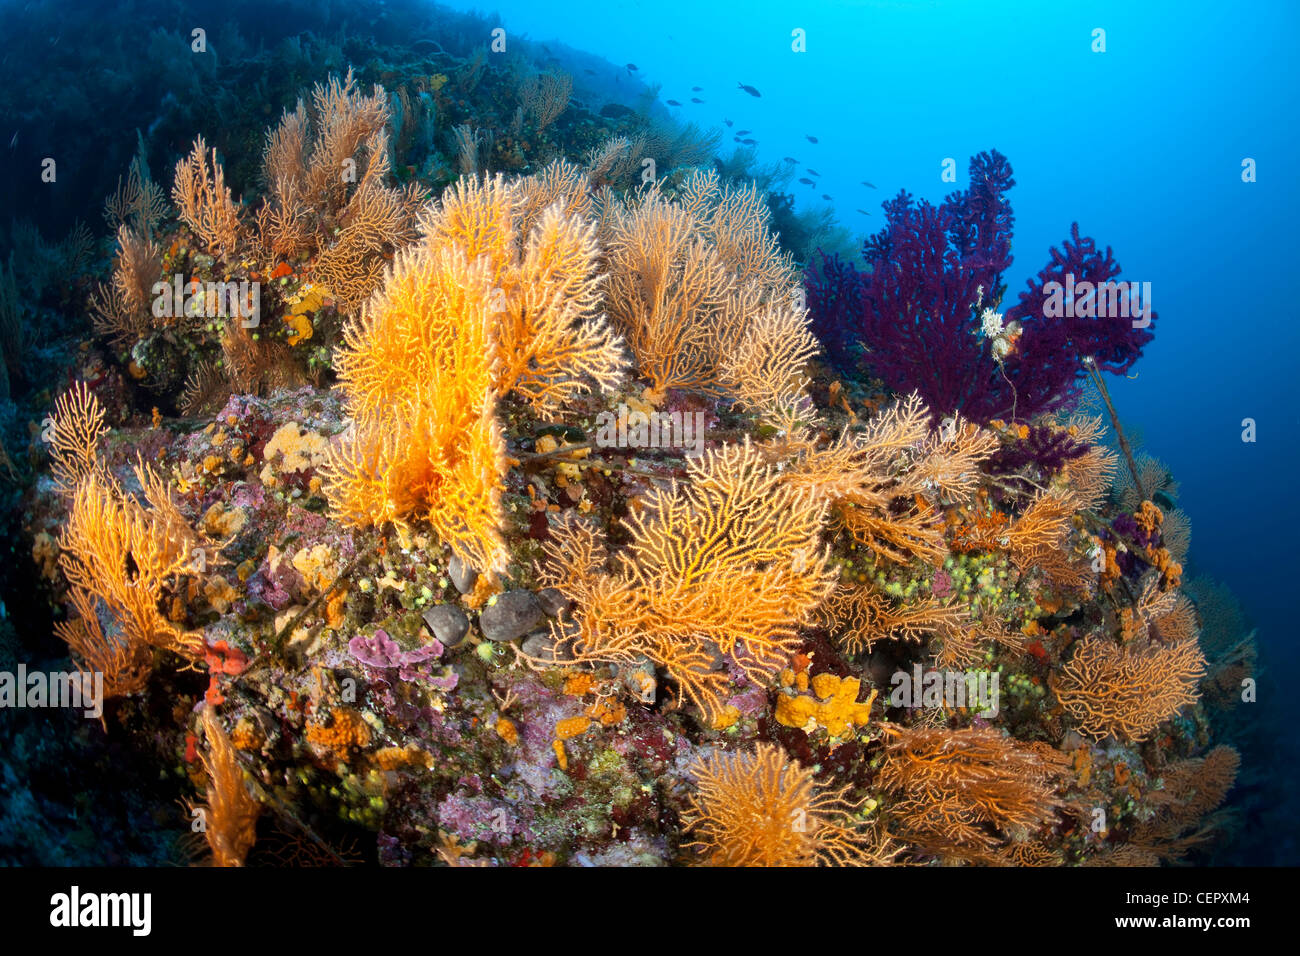 Yellow Gorgonian in Coral Reef, Eunicella cavolini, Vis Island, Adriatic Sea, Croatia Stock Photo